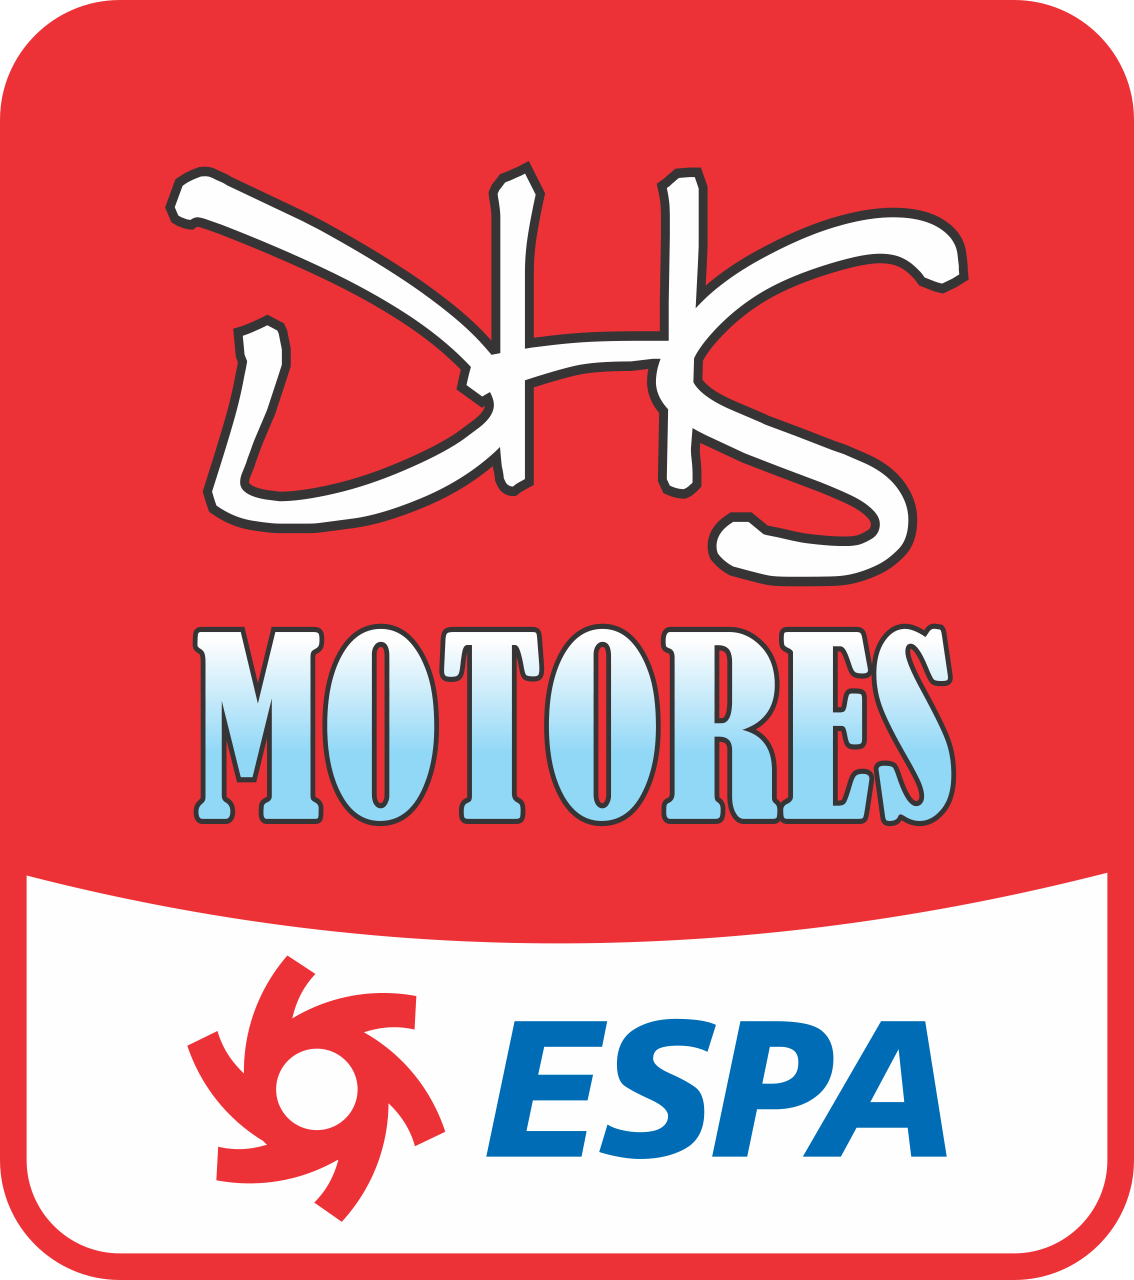 Images Dhs Motores - Espa